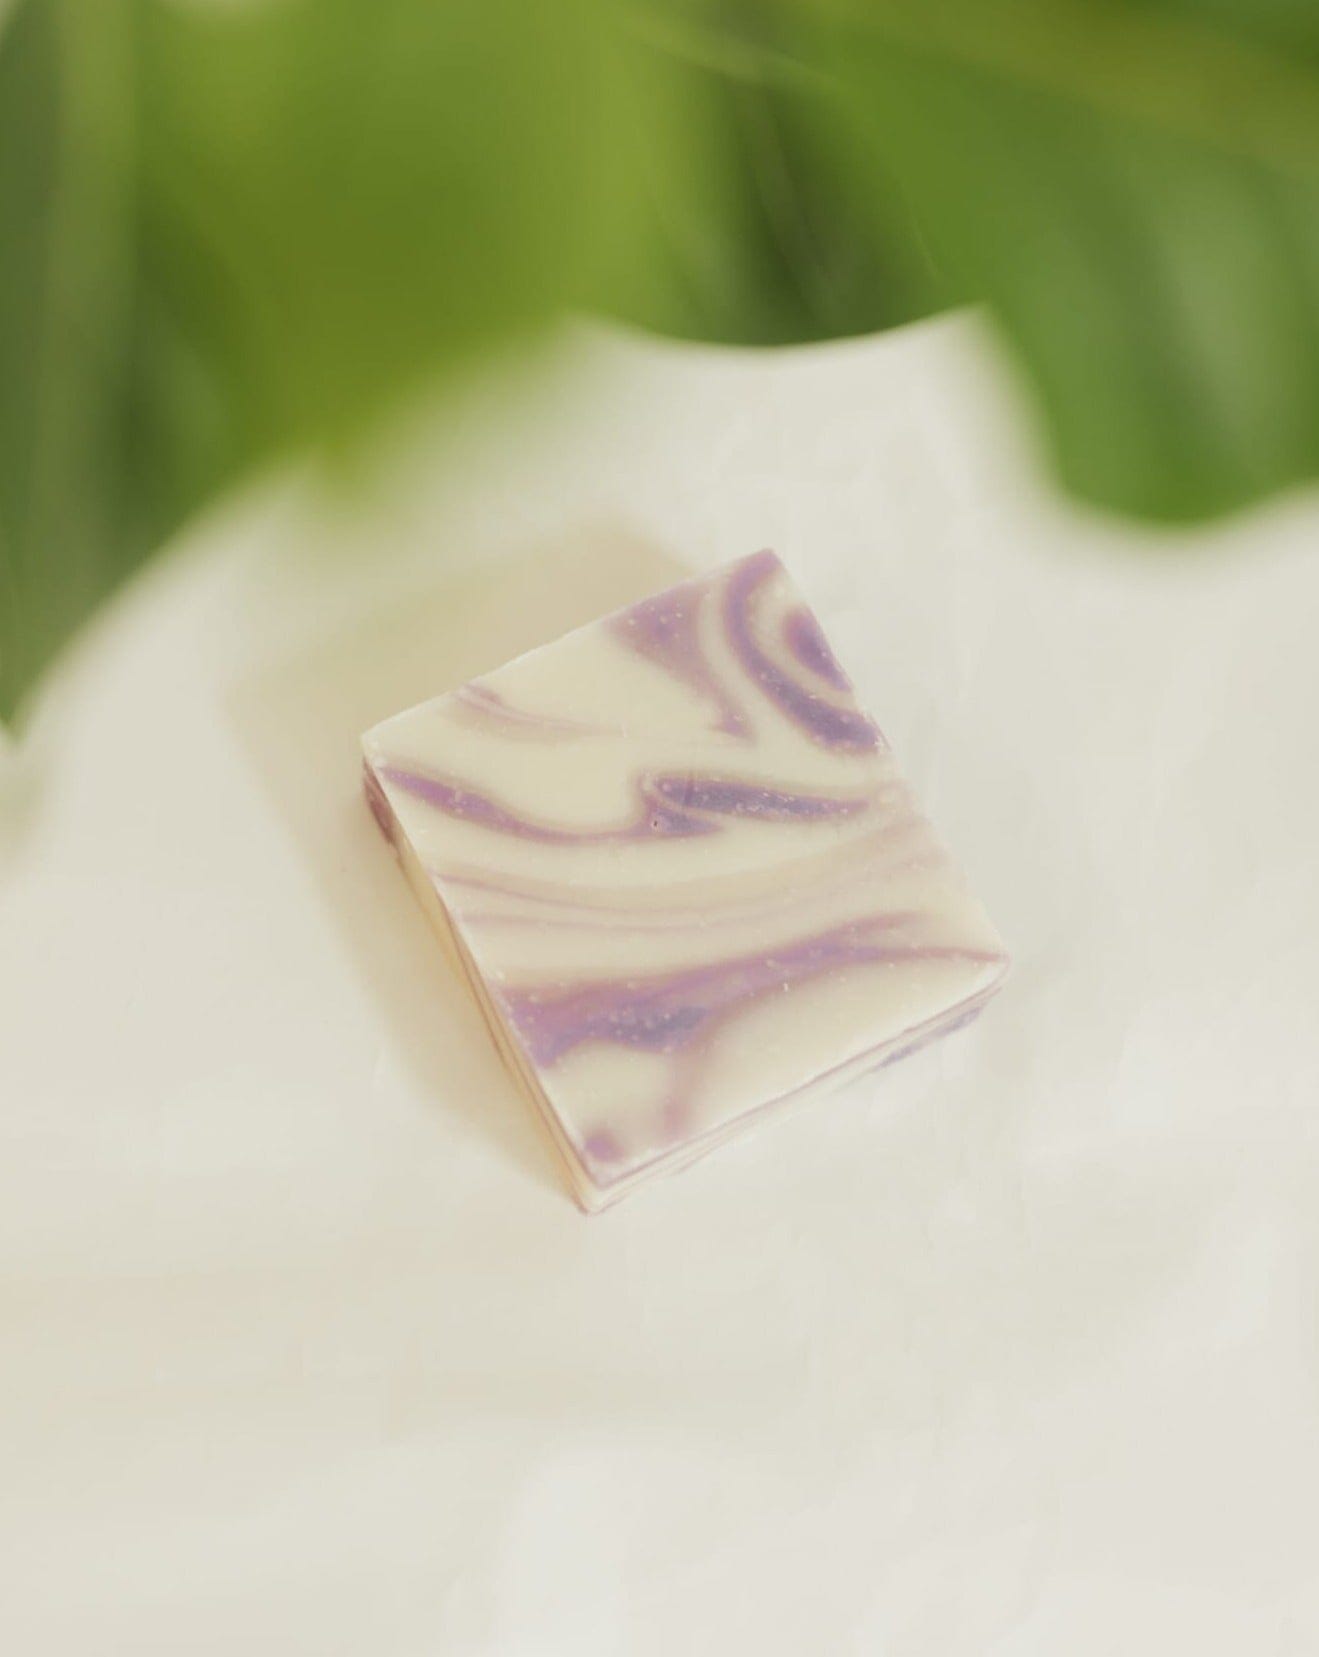 Natural Bar Soap | Lavender + Bergamot Zero Waste MVMT 